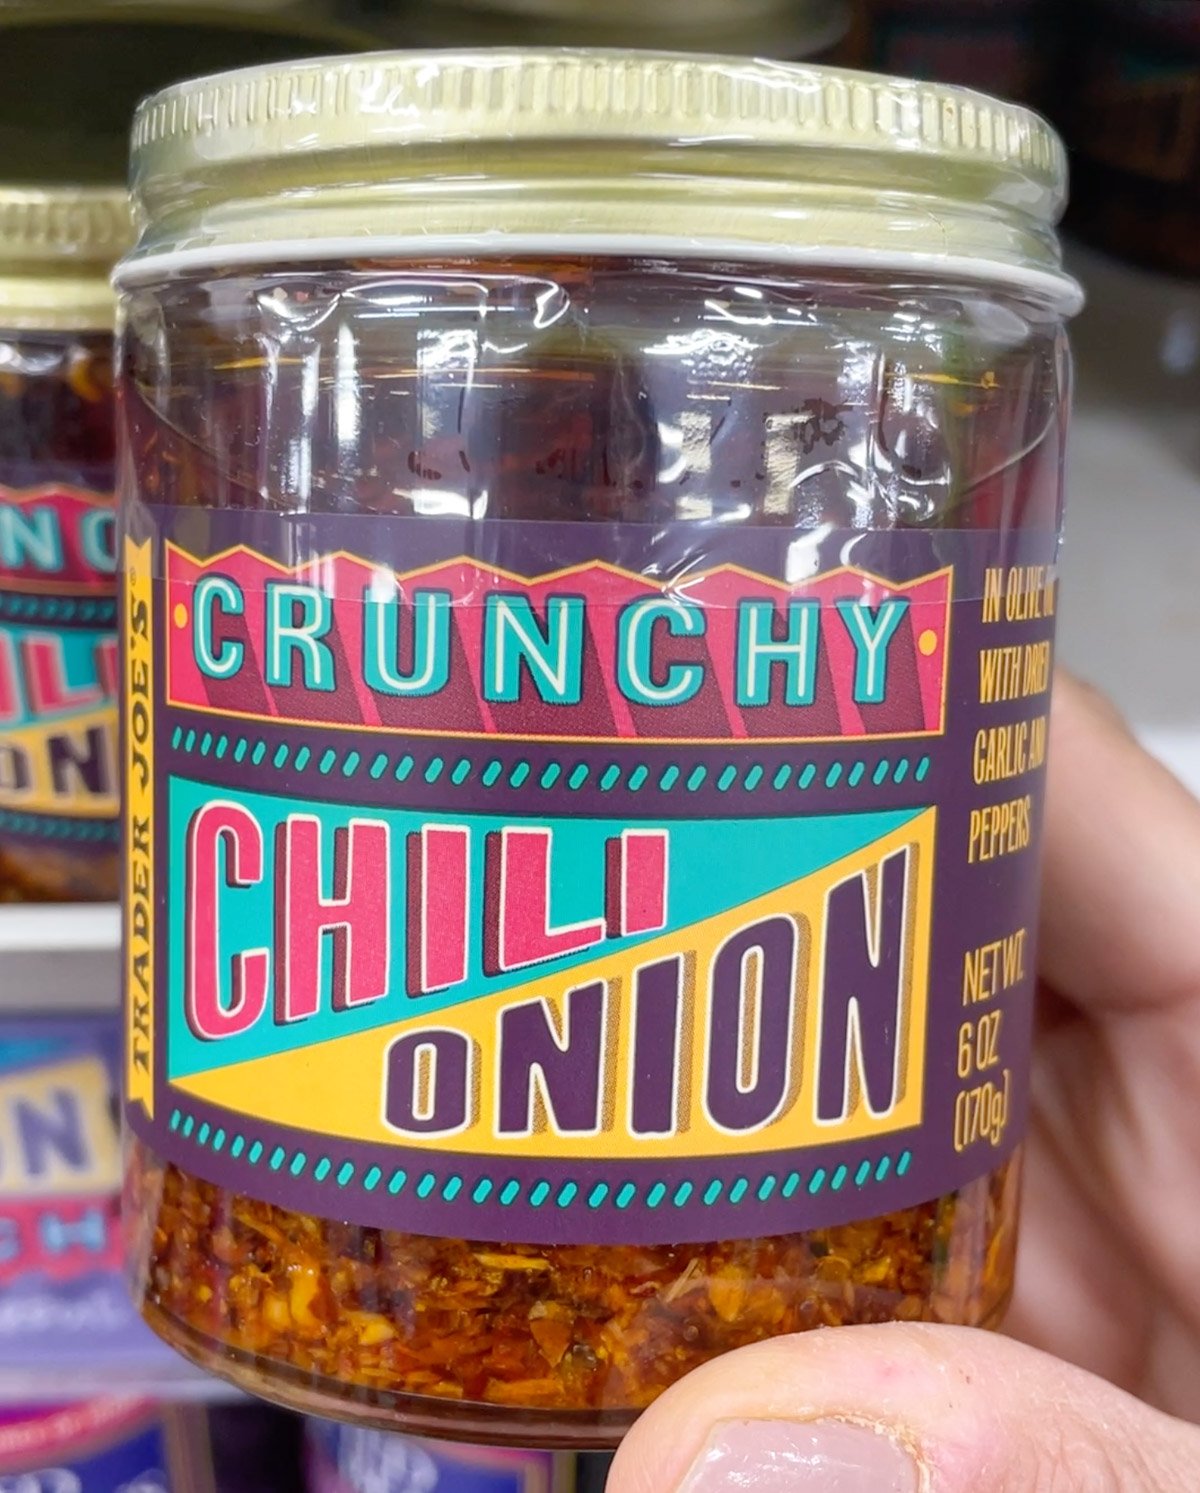 Trader Joe's Crunchy Chili Onion